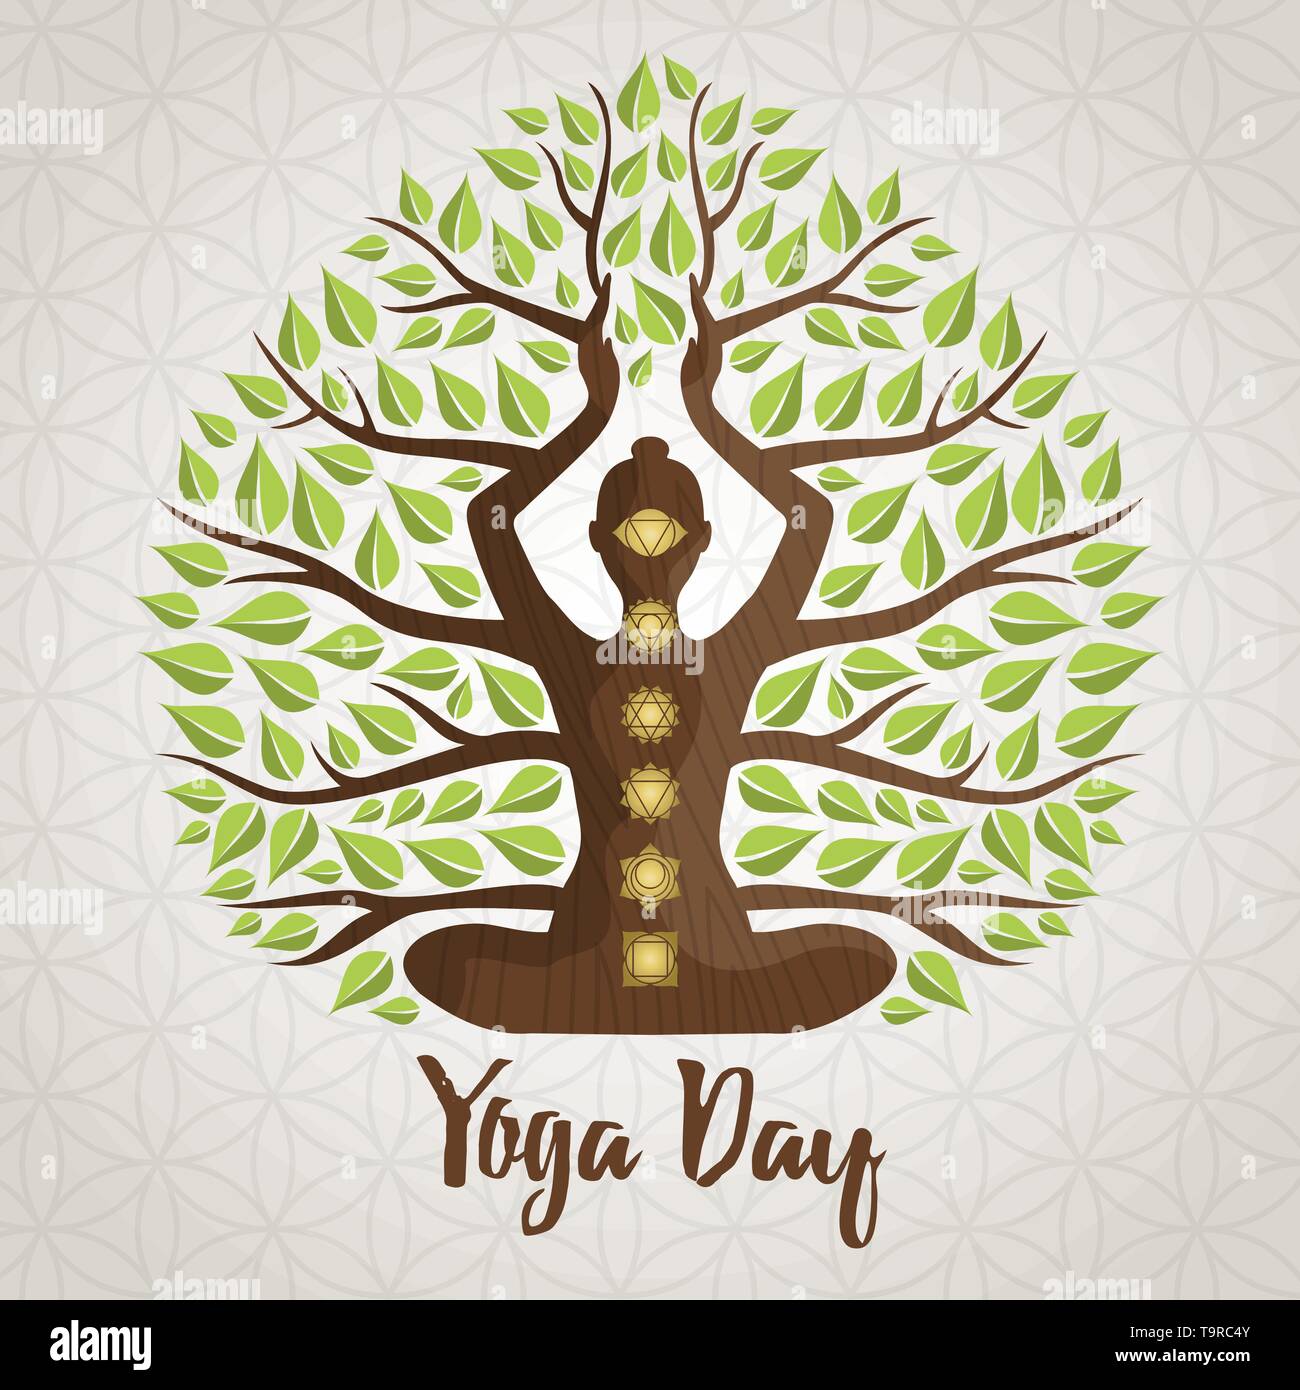 Internationale Yoga Tag Grußkarte Abbildung: Frau Silhouette, chakra Symbole und Blätter für Natur-Konzept. Stock Vektor